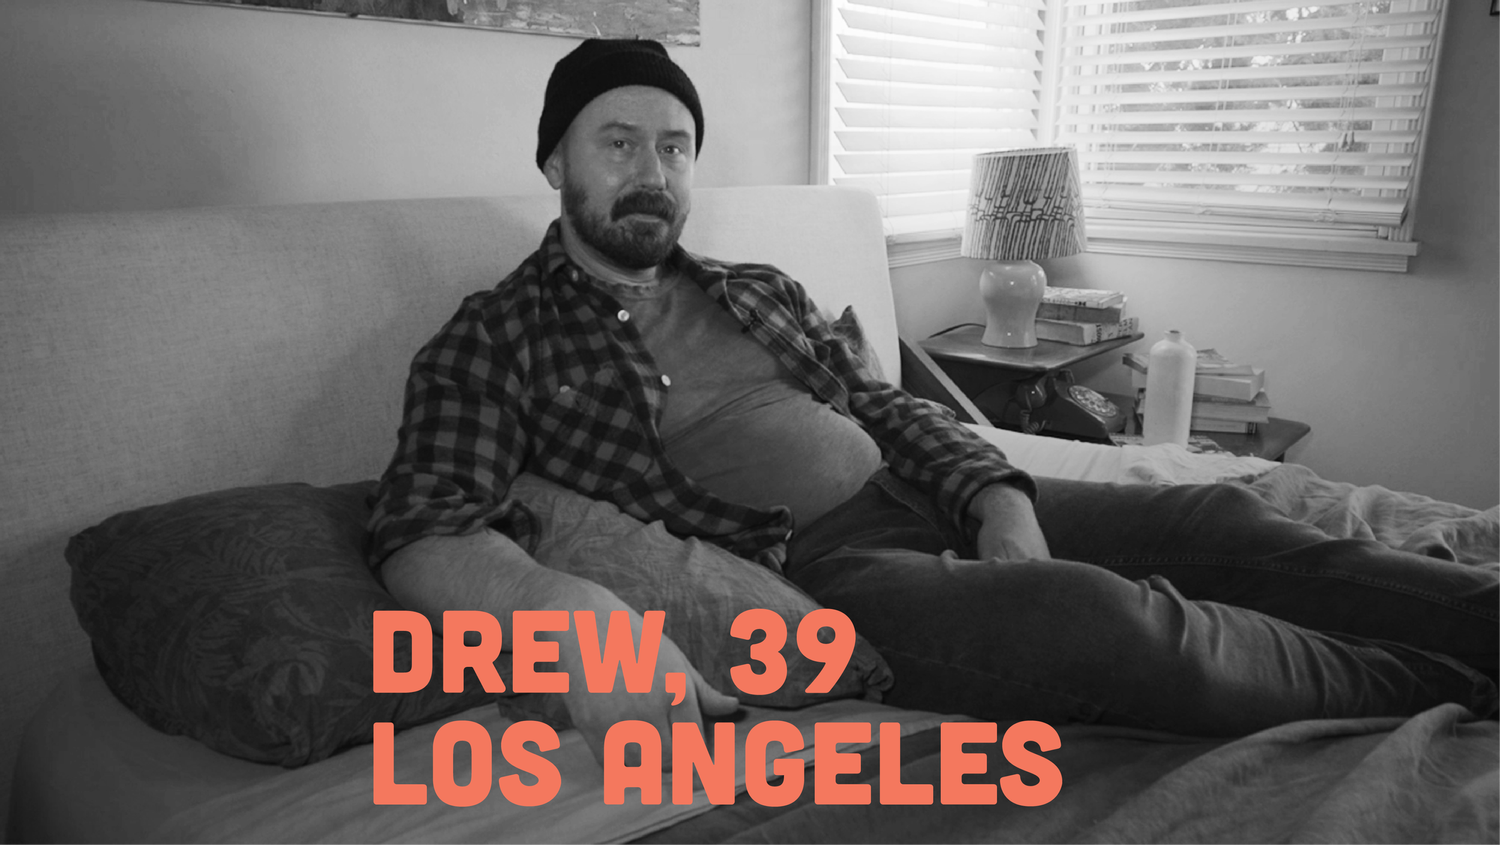 Fruitbowl - S4E4 - Drew, 39. Los Angeles